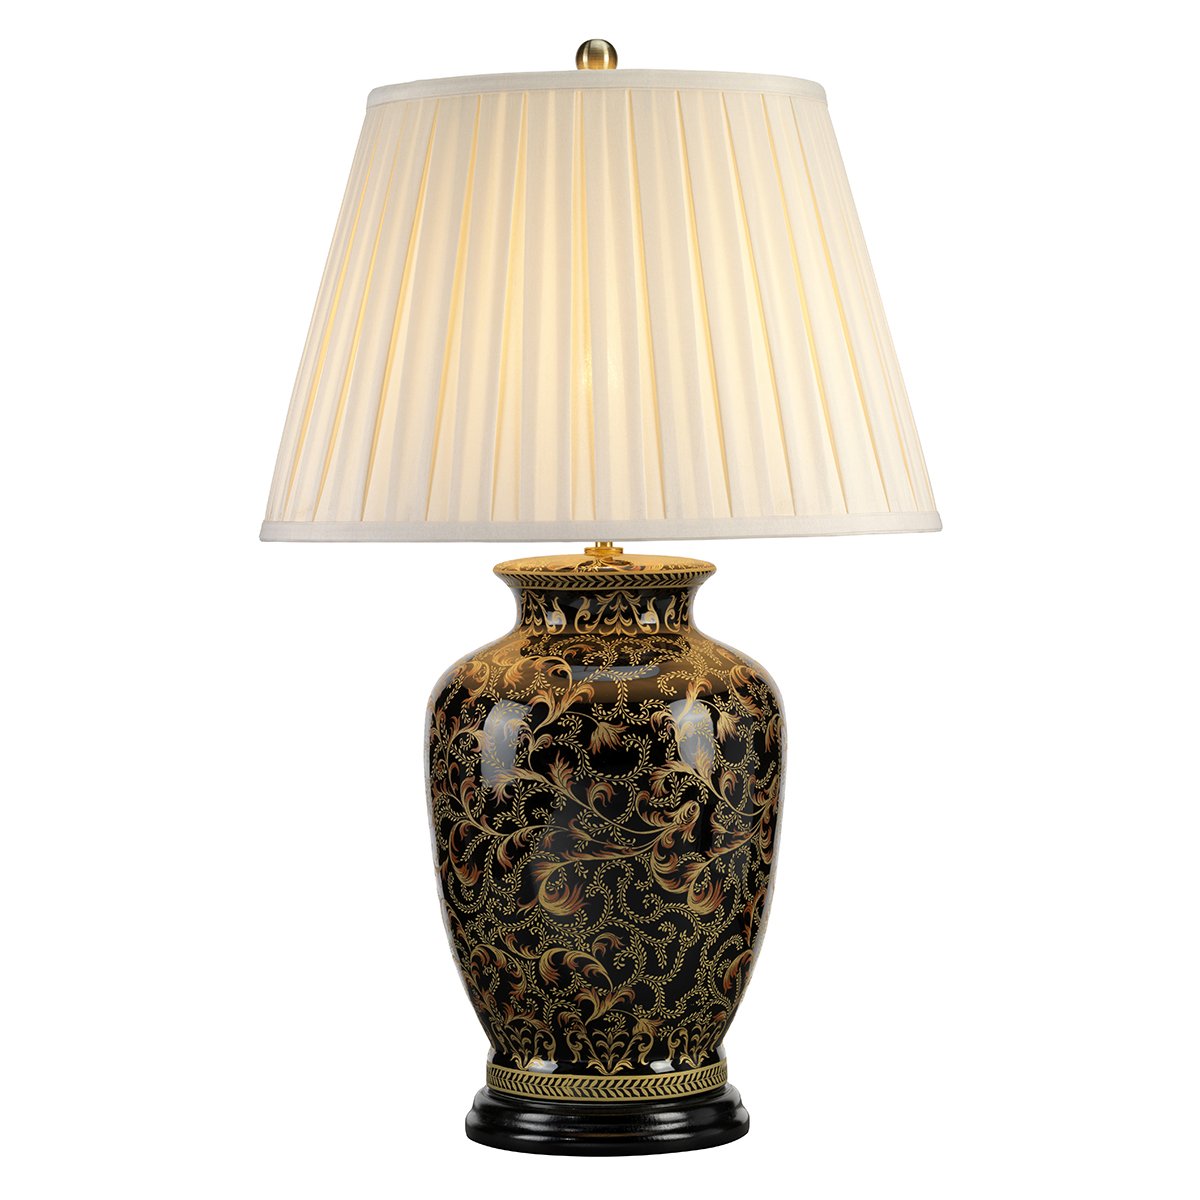 Mottingham Gold/Black Large Table Lamp c/w shade - ID 8381